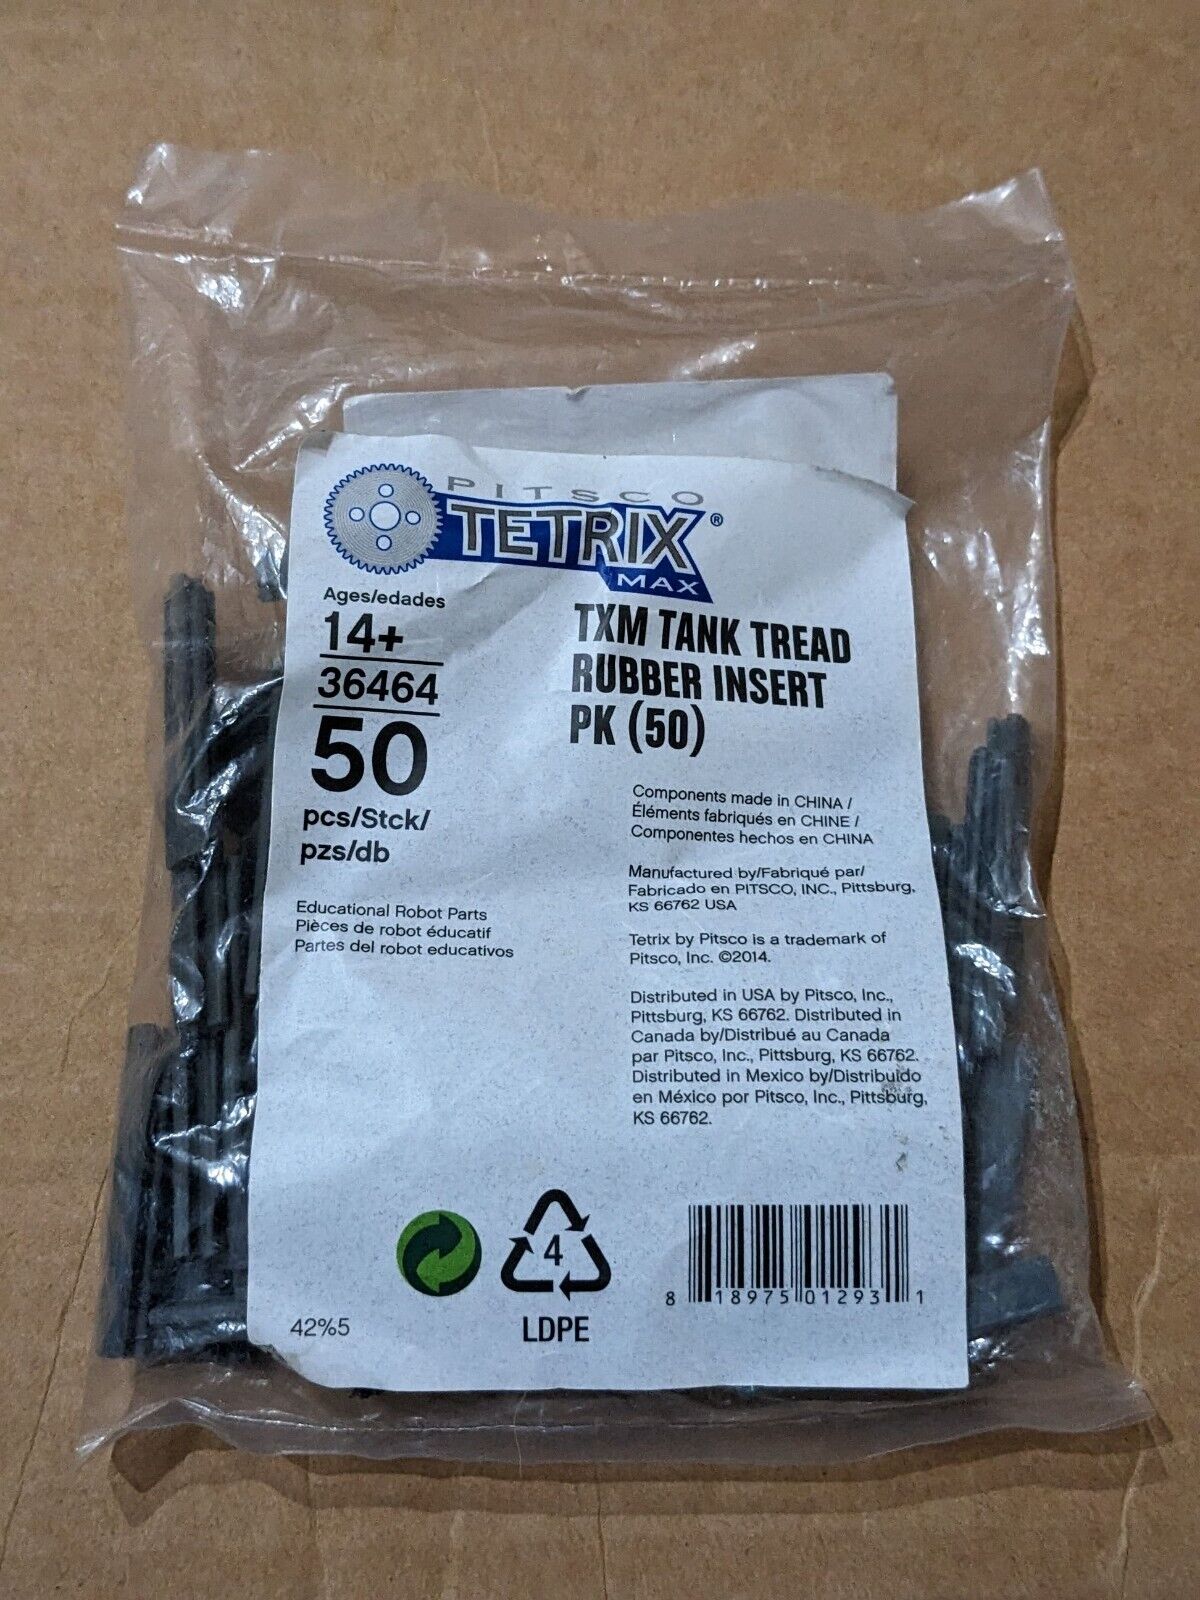 Tetrix Max Pitsco TXM tank tread rubber insert 50 pk 36464 original unopened